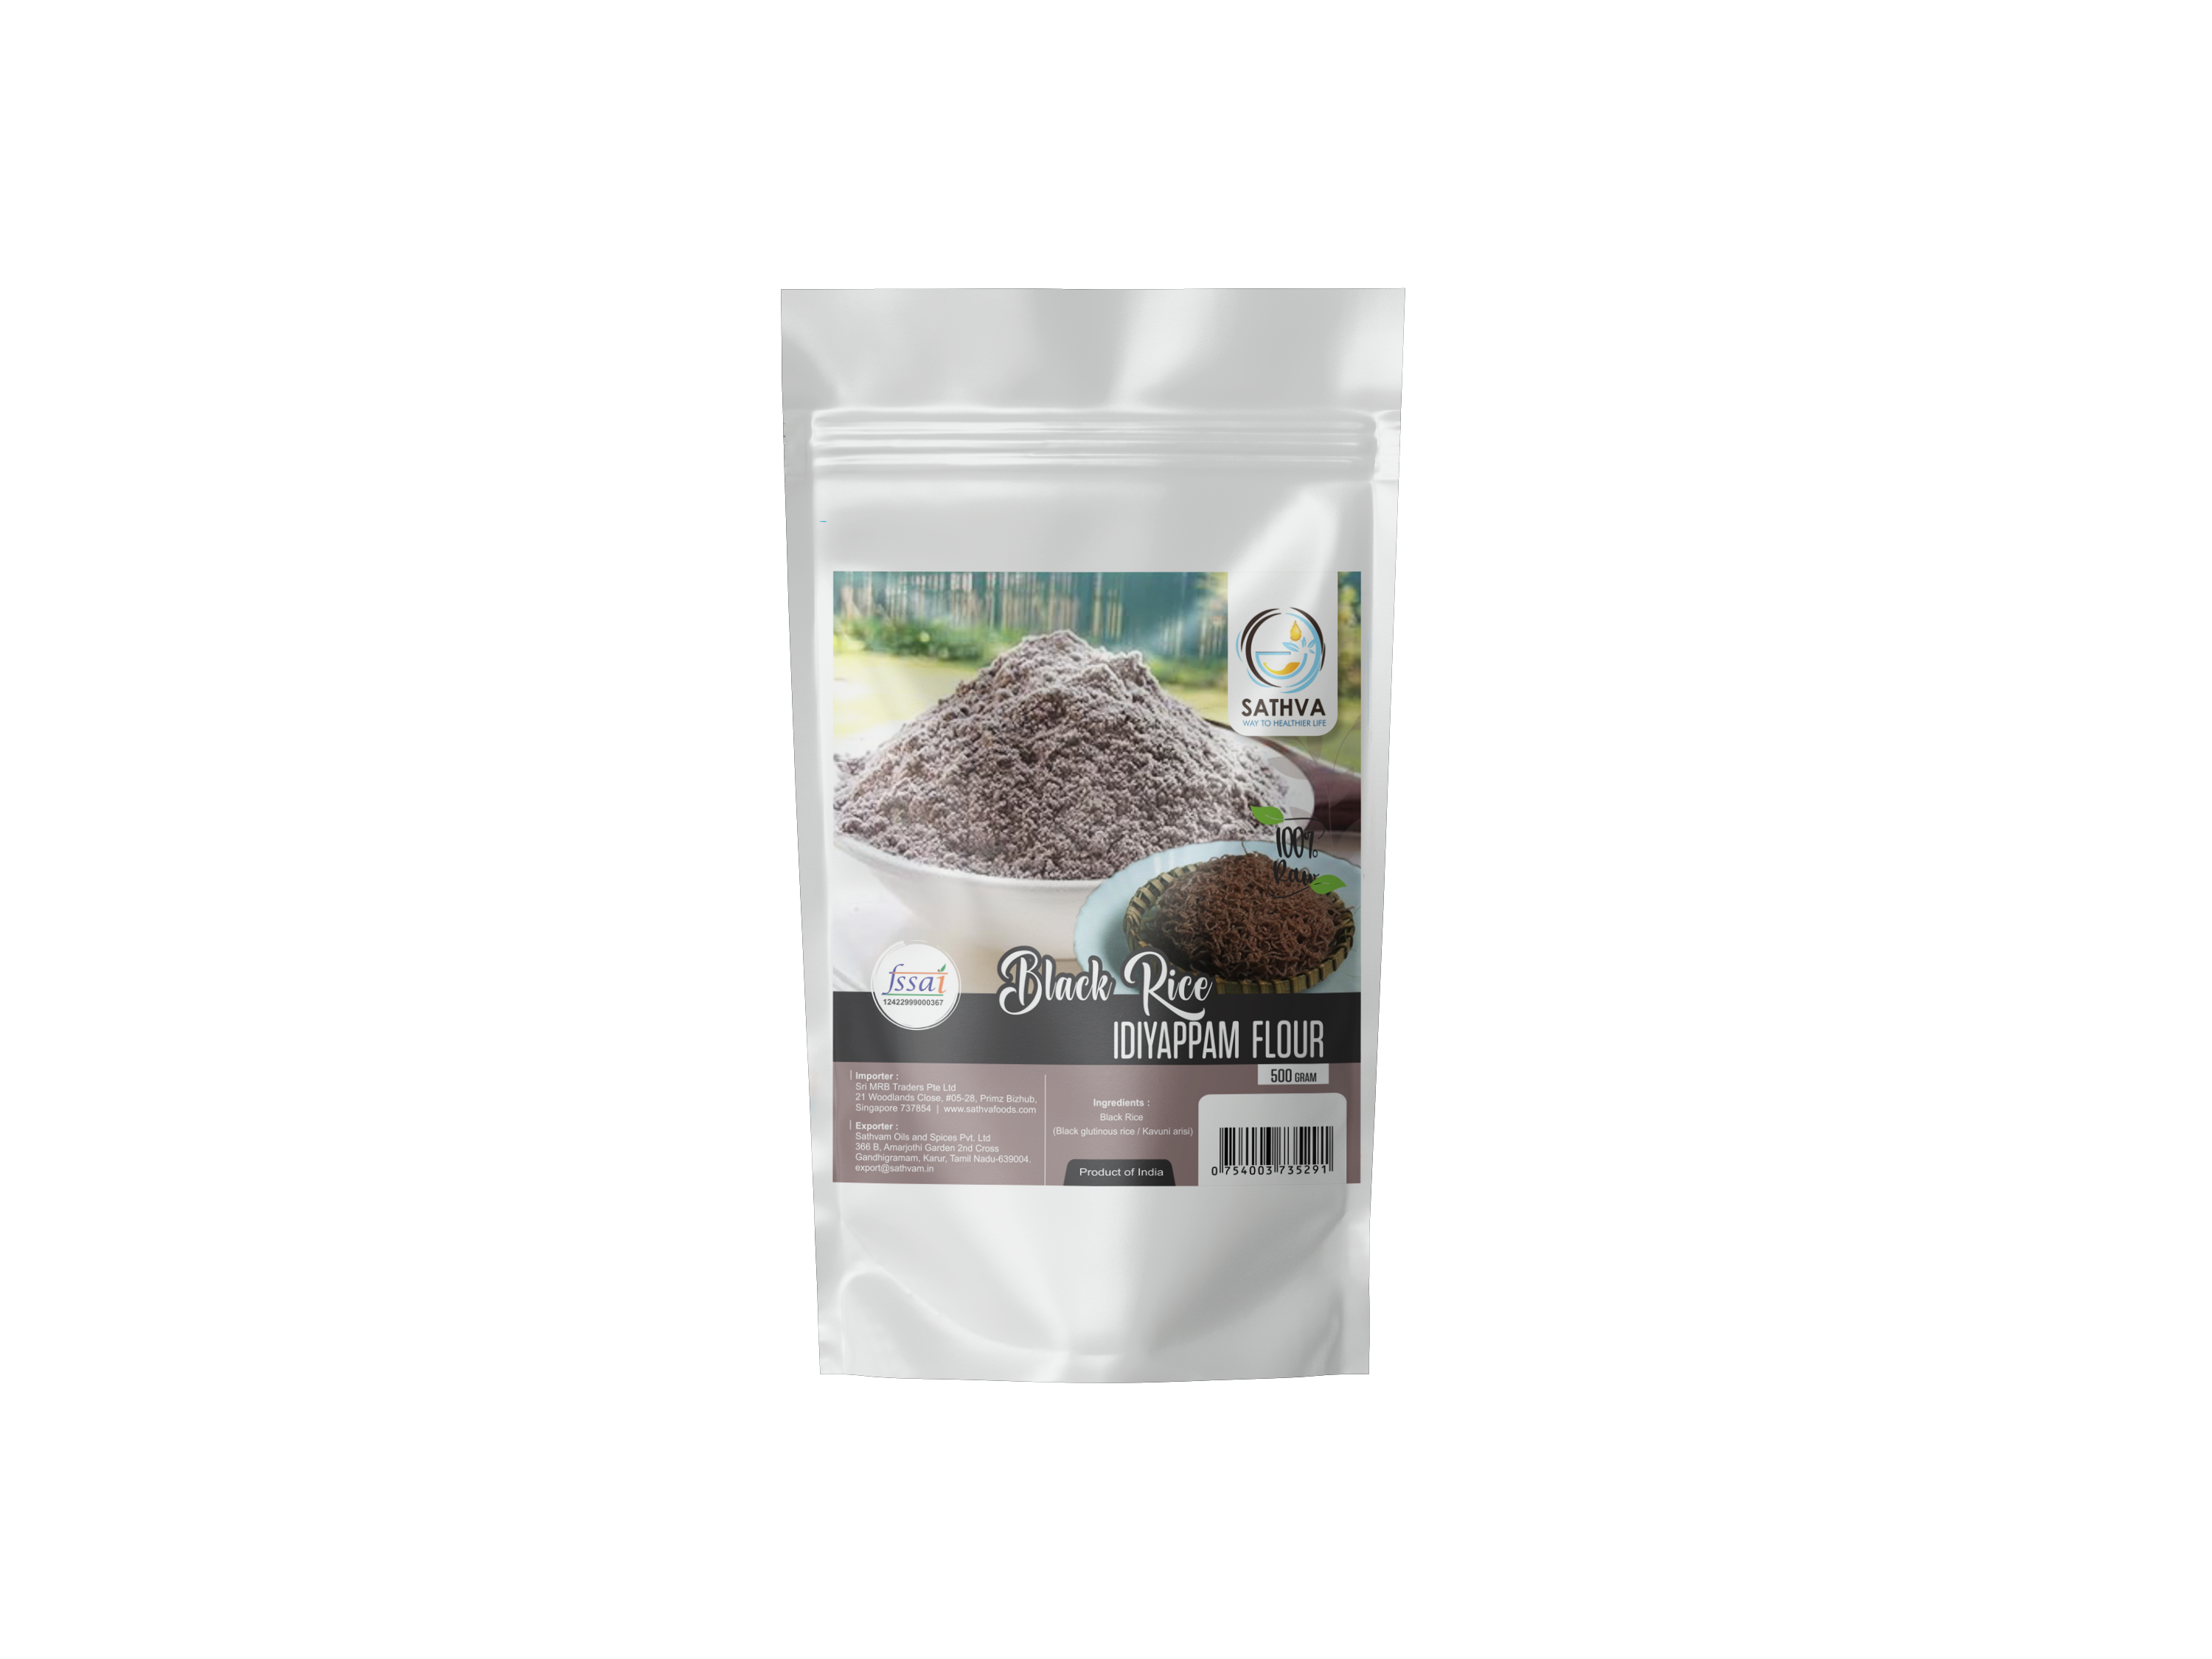 Black Rice Idiyappam Flour - 500g